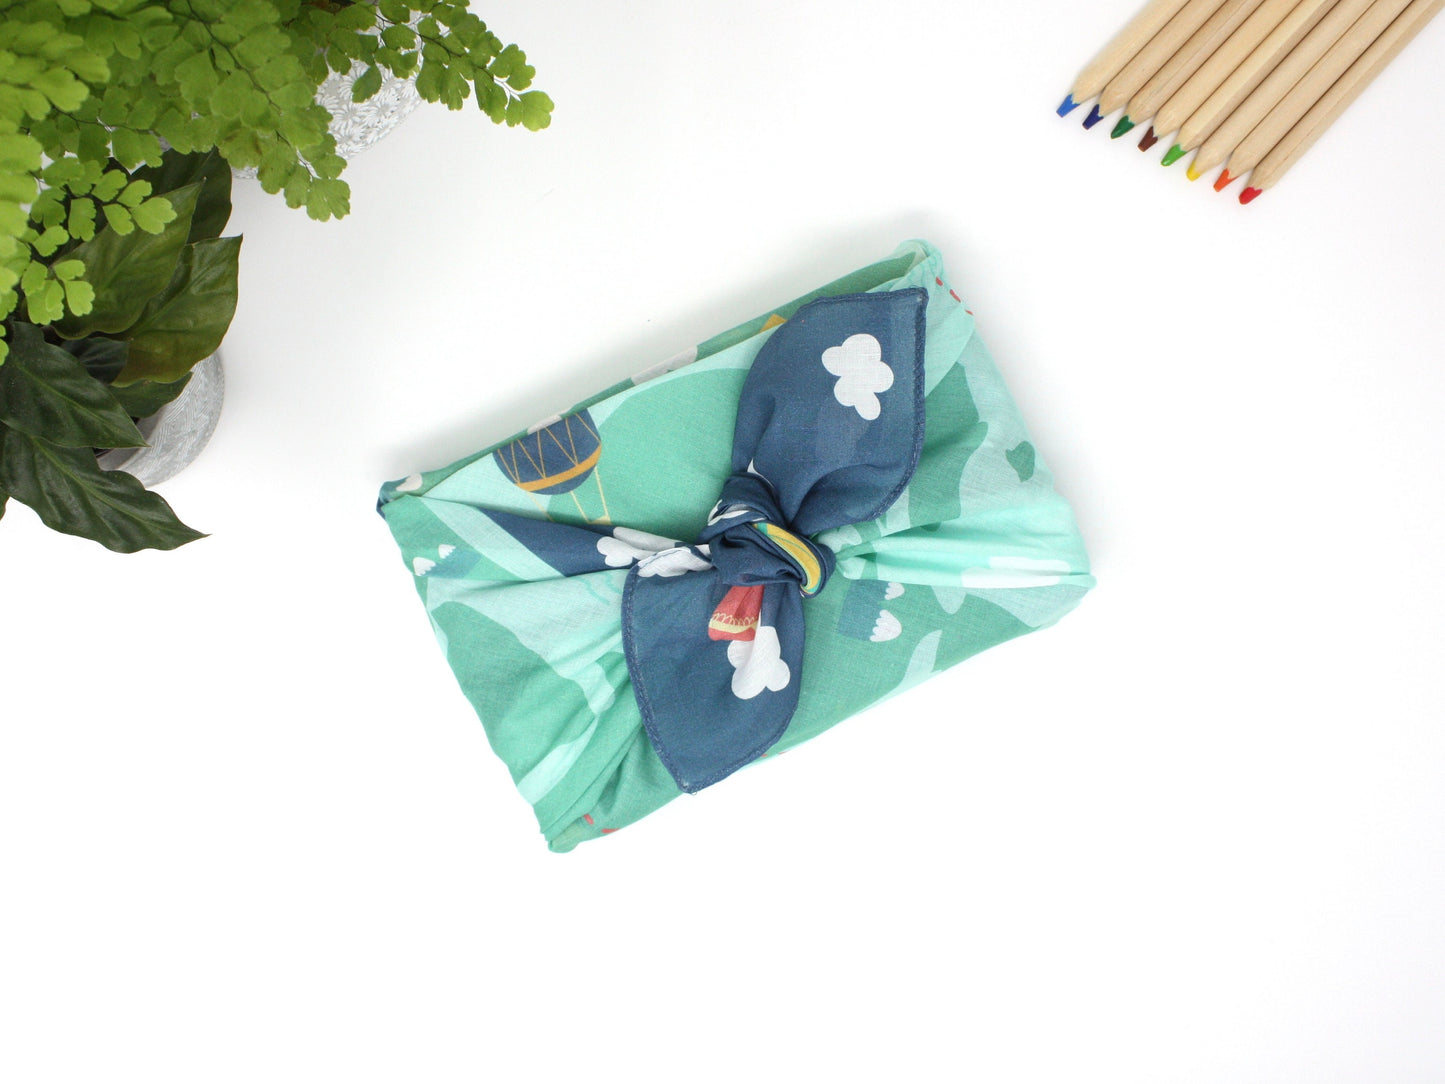 Kids furoshiki set of 3 - large and medium reusable gift wraps